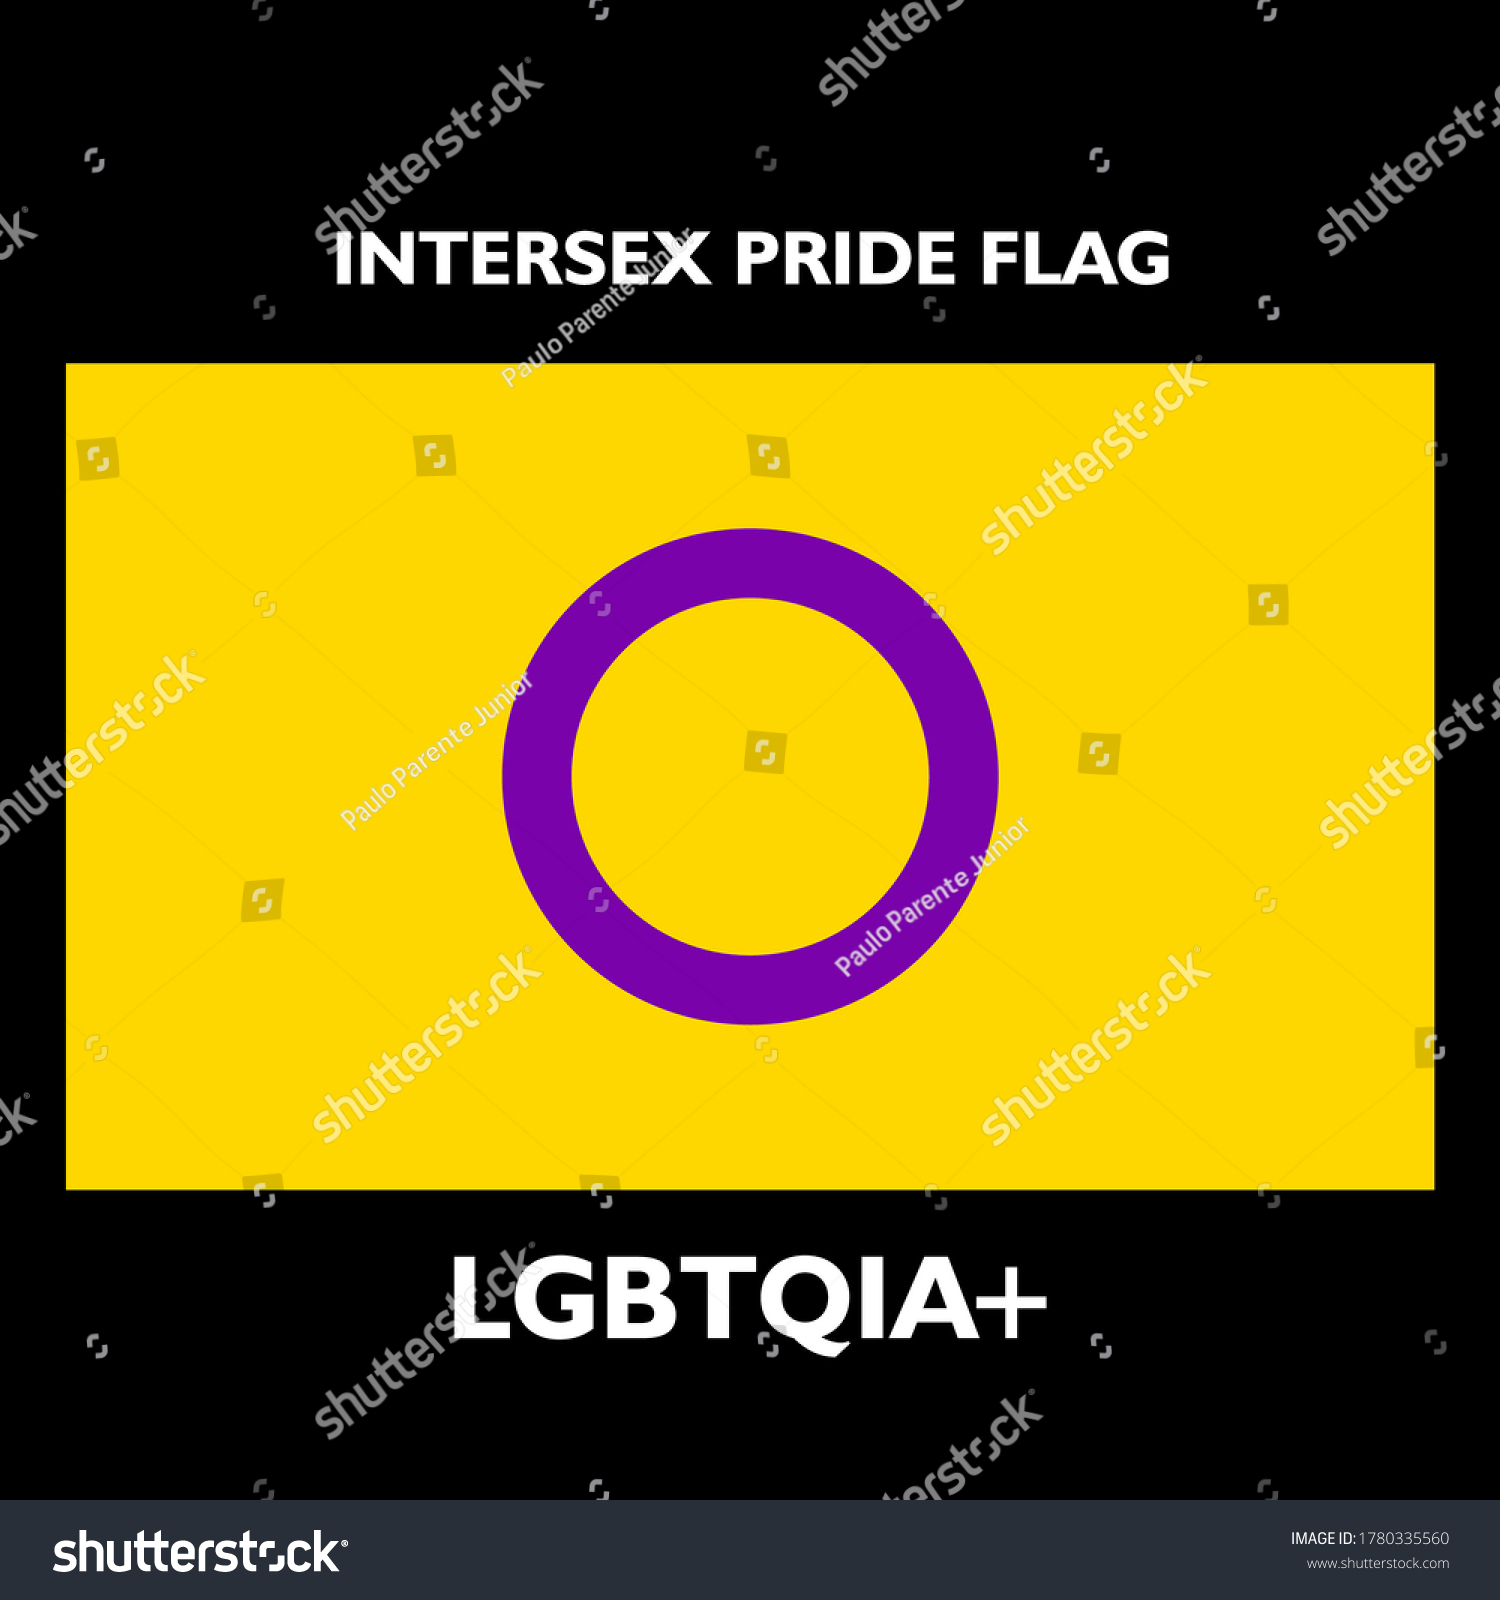 Vector Lgbt Intersex Pride Flag เวกเตอร์สต็อก ปลอดค่าลิขสิทธิ์ 1780335560 Shutterstock 1287